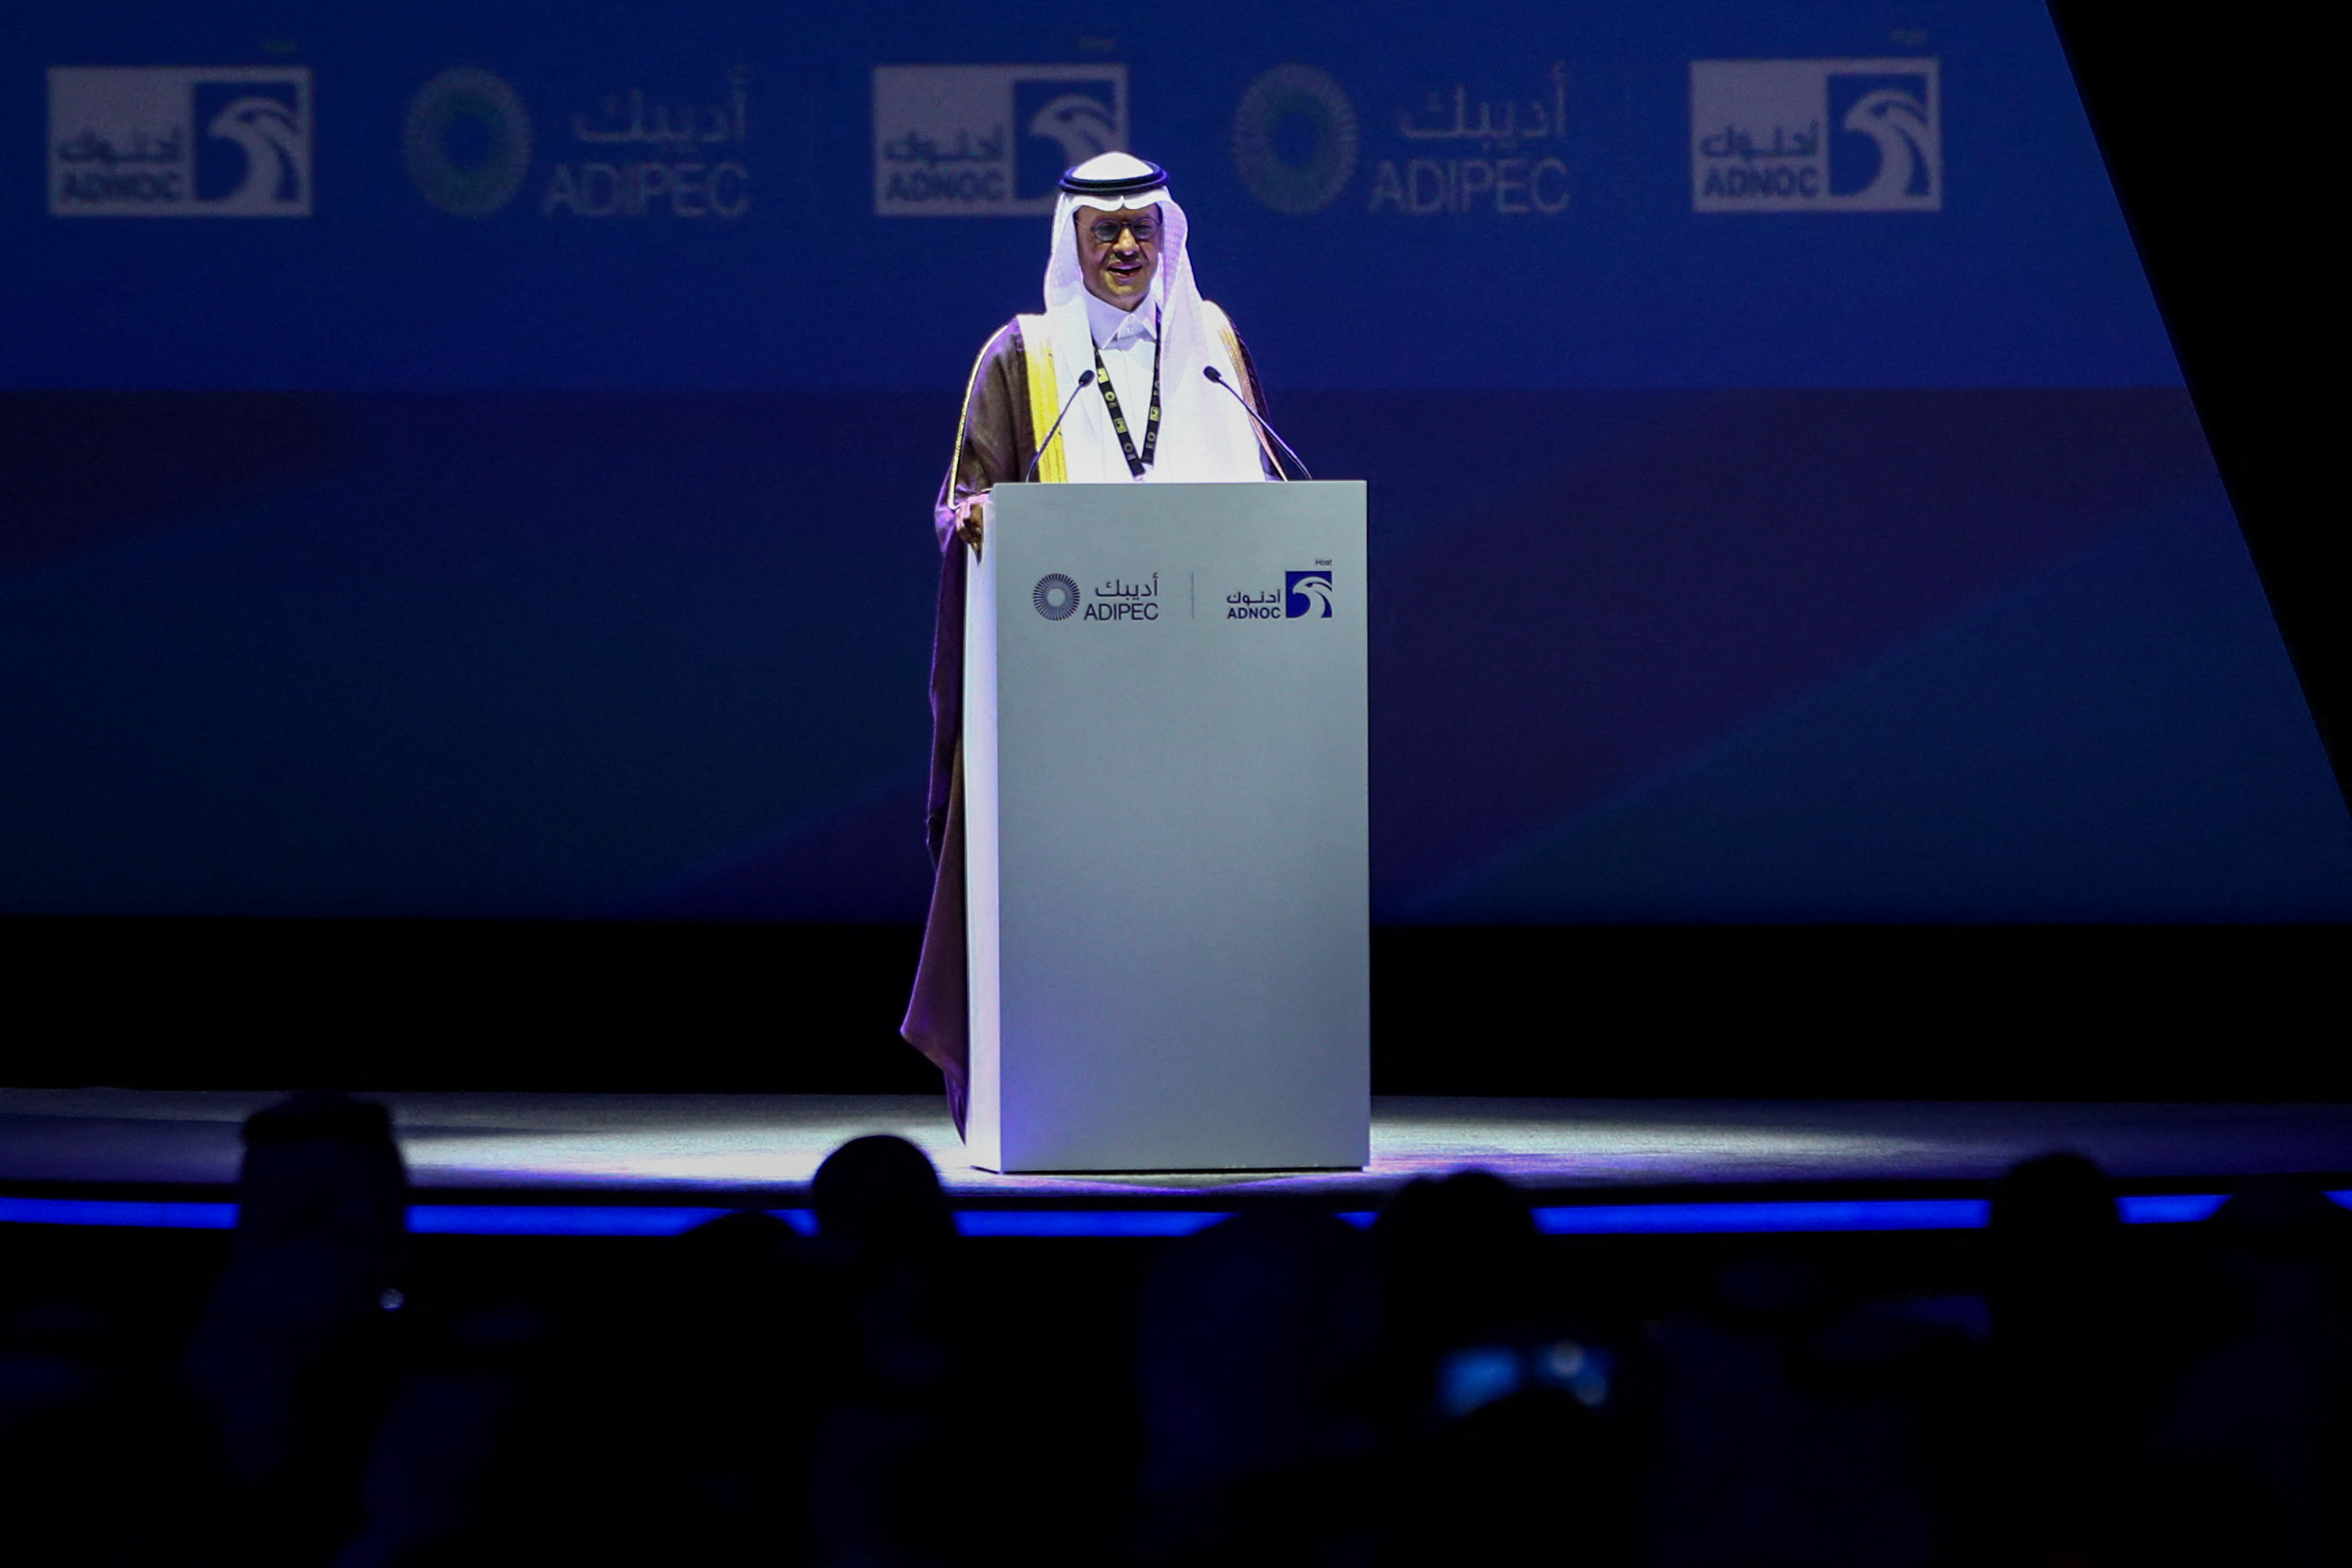 Saudi Arabia's Minister of Energy Prince Abdulaziz bin Salman Al-Saud speaks during the Abu Dhabi International Petroleum Exhibition and Conference (ADIPEC) in Abu Dhabi